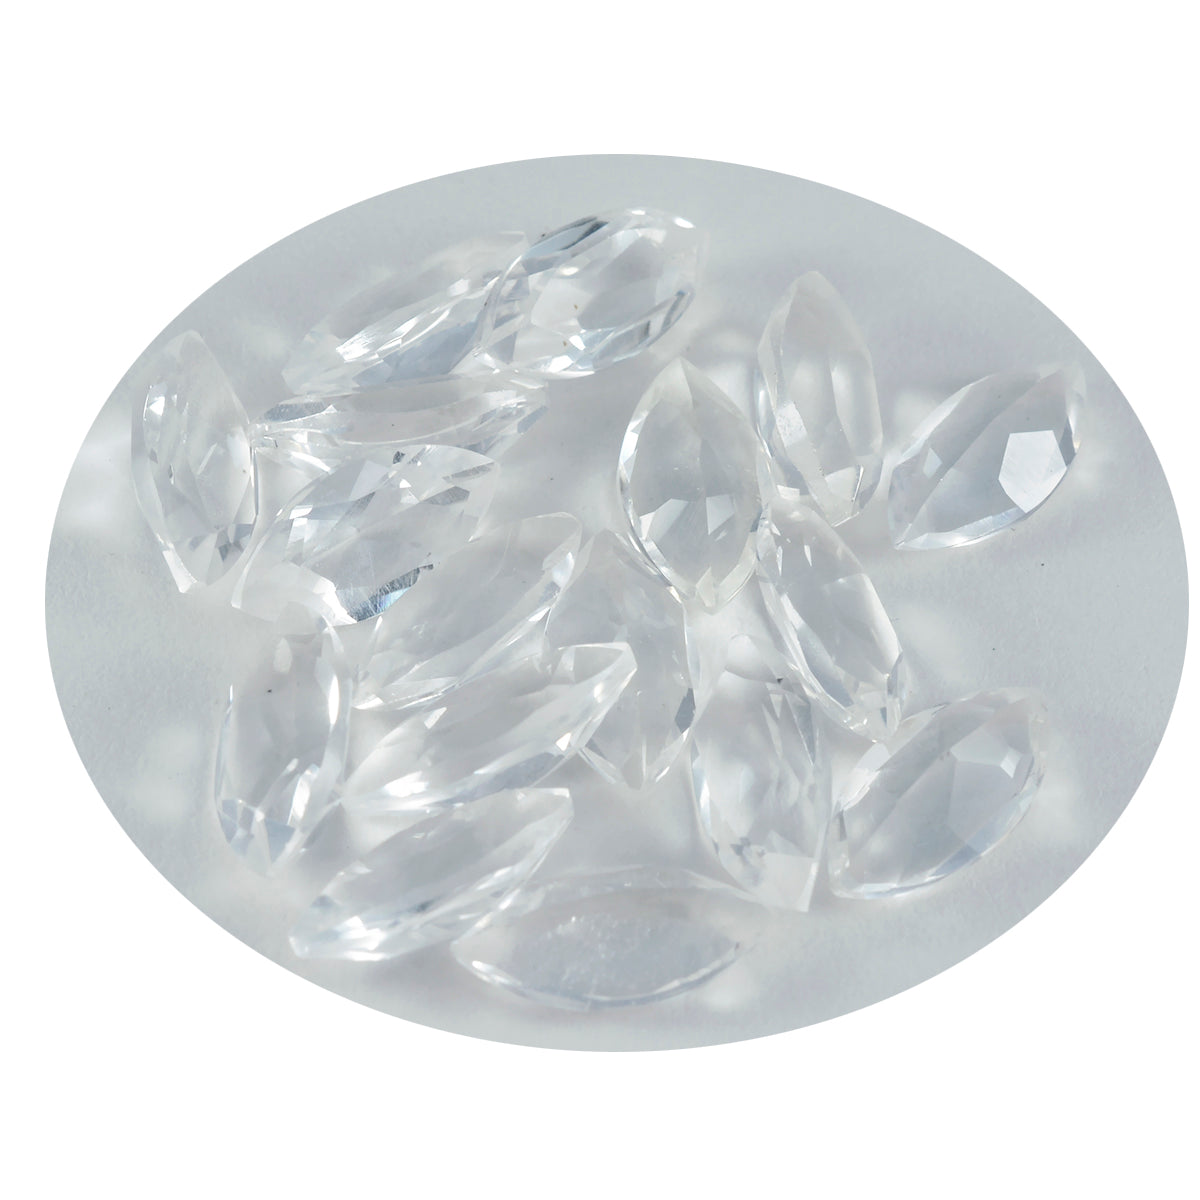 Riyogems 1PC wit kristalkwarts gefacetteerd 6x12 mm marquise vorm A+ kwaliteitsedelstenen